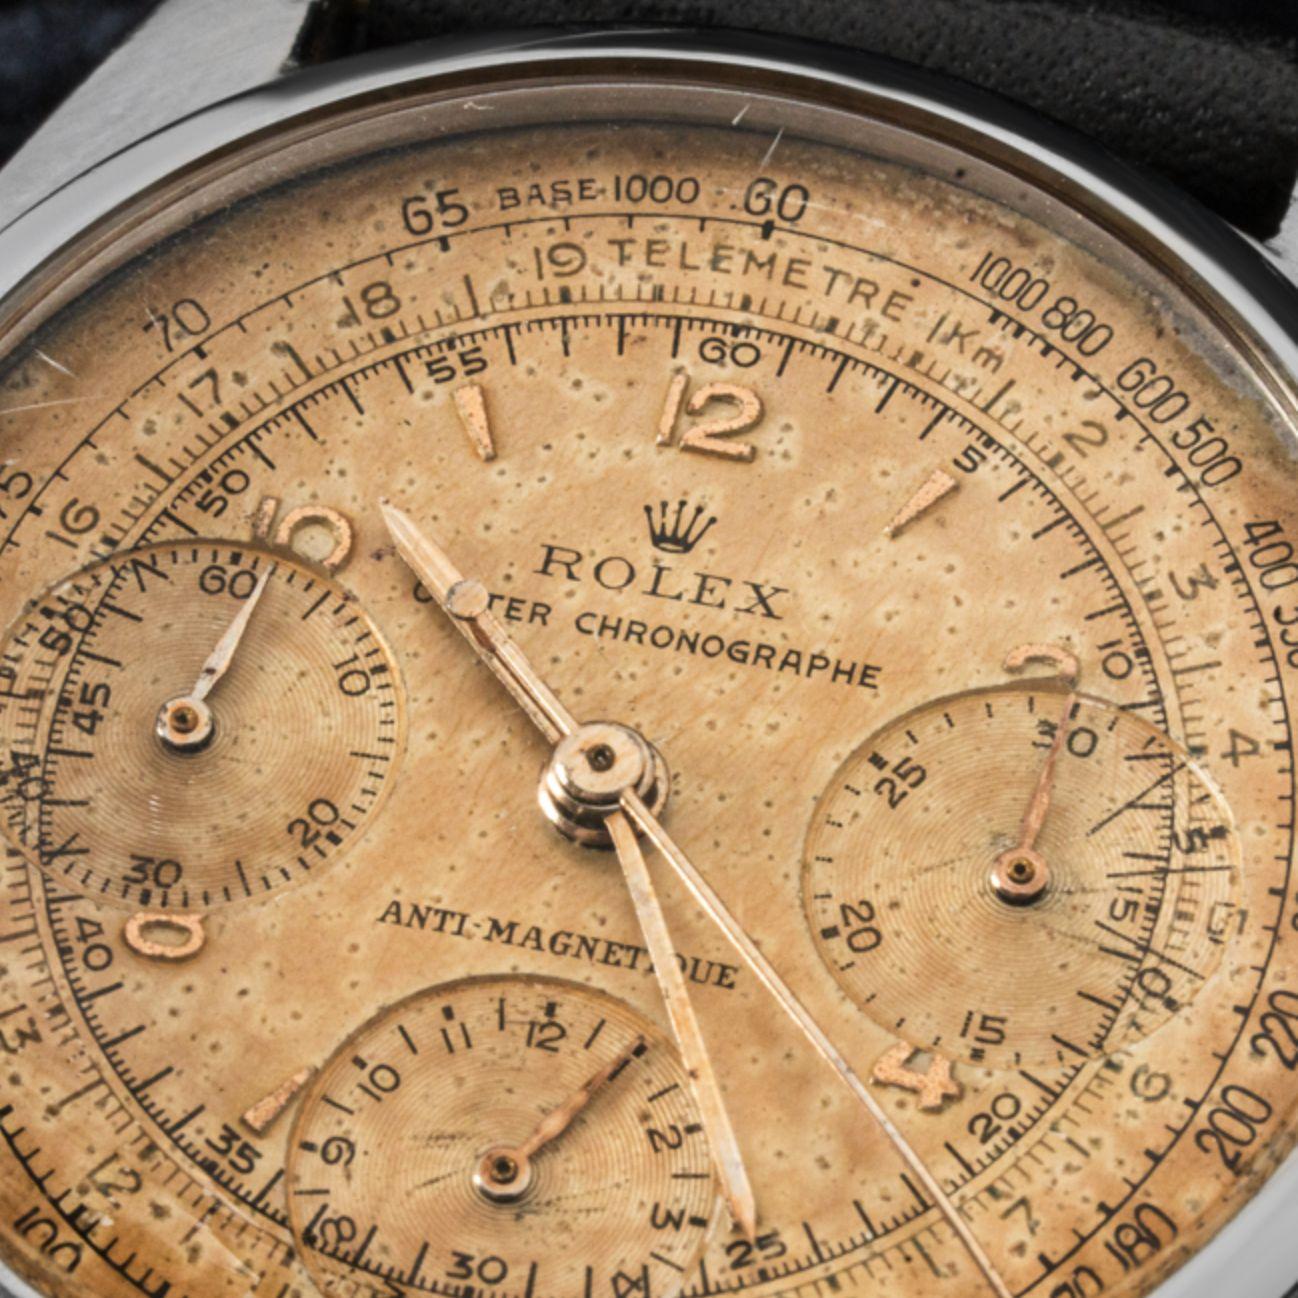 Men's Rare Antique Rolex Chronographe Stainless Steel For Sale